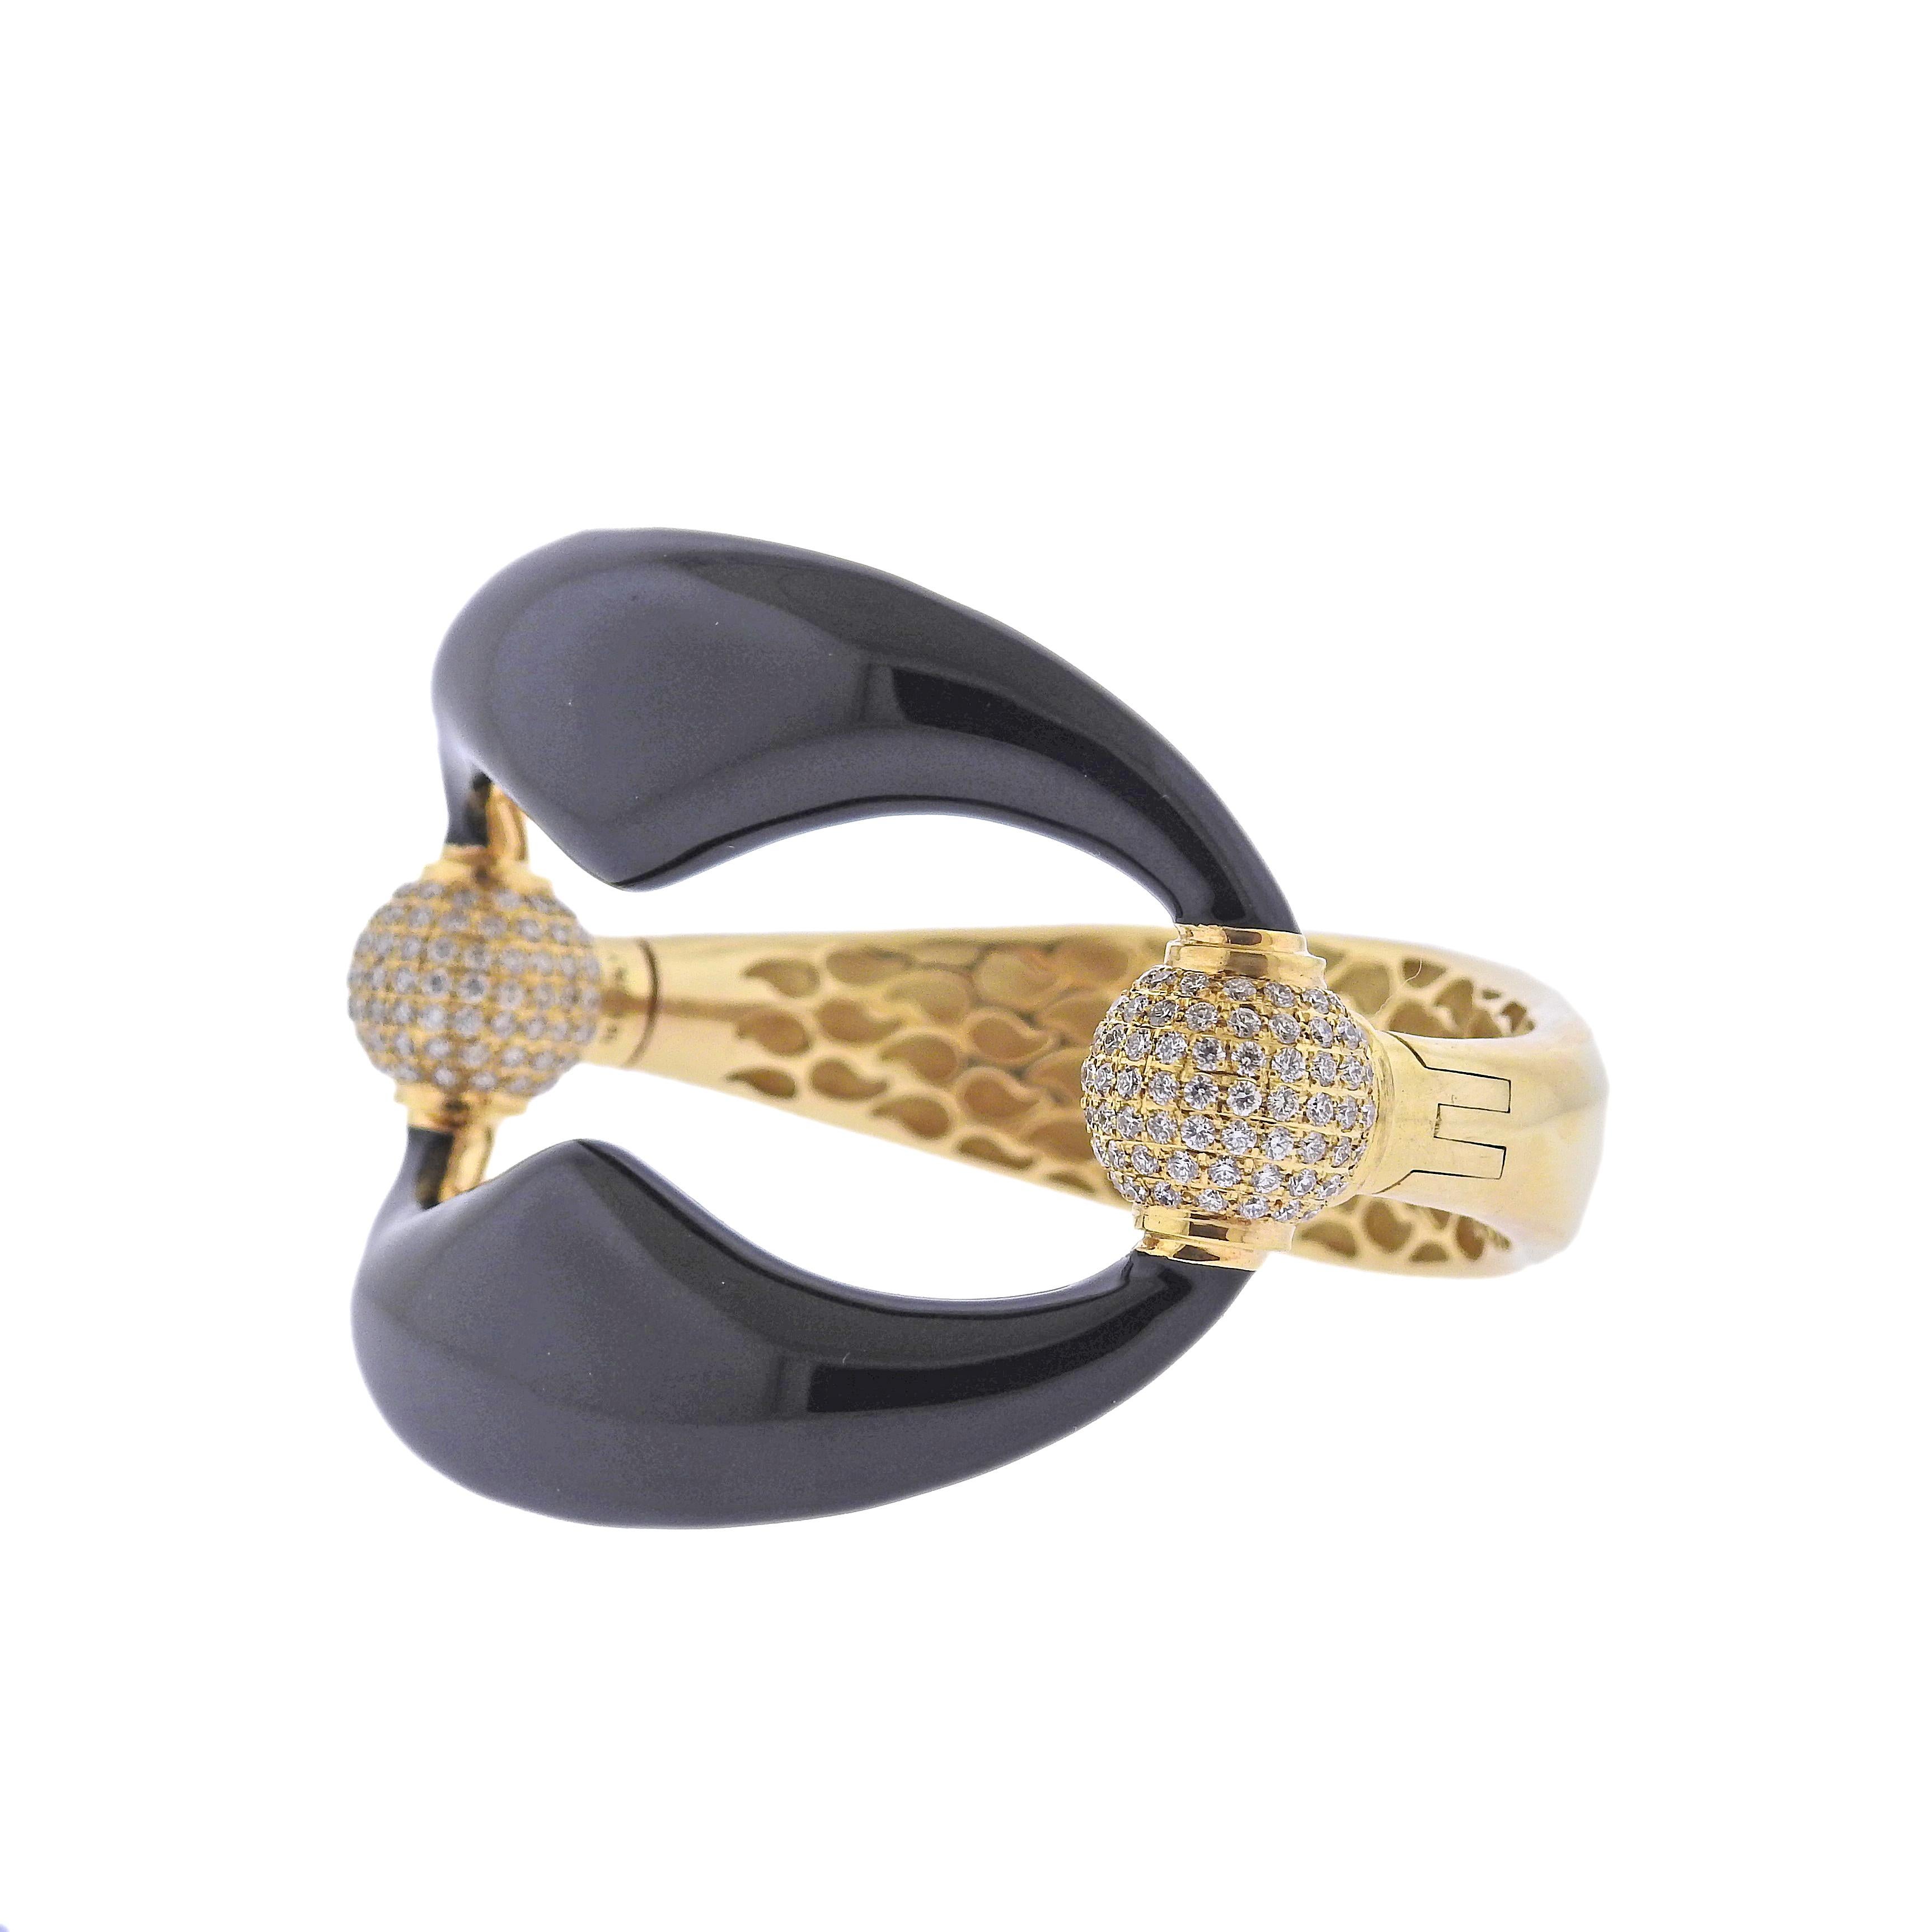 18k rose gold bangle bracelet by Italian designer Nicolis Cola, set with black enamel and approx. 3.15ctw in G/VS diamonds. Bracelet will fit approx. 7